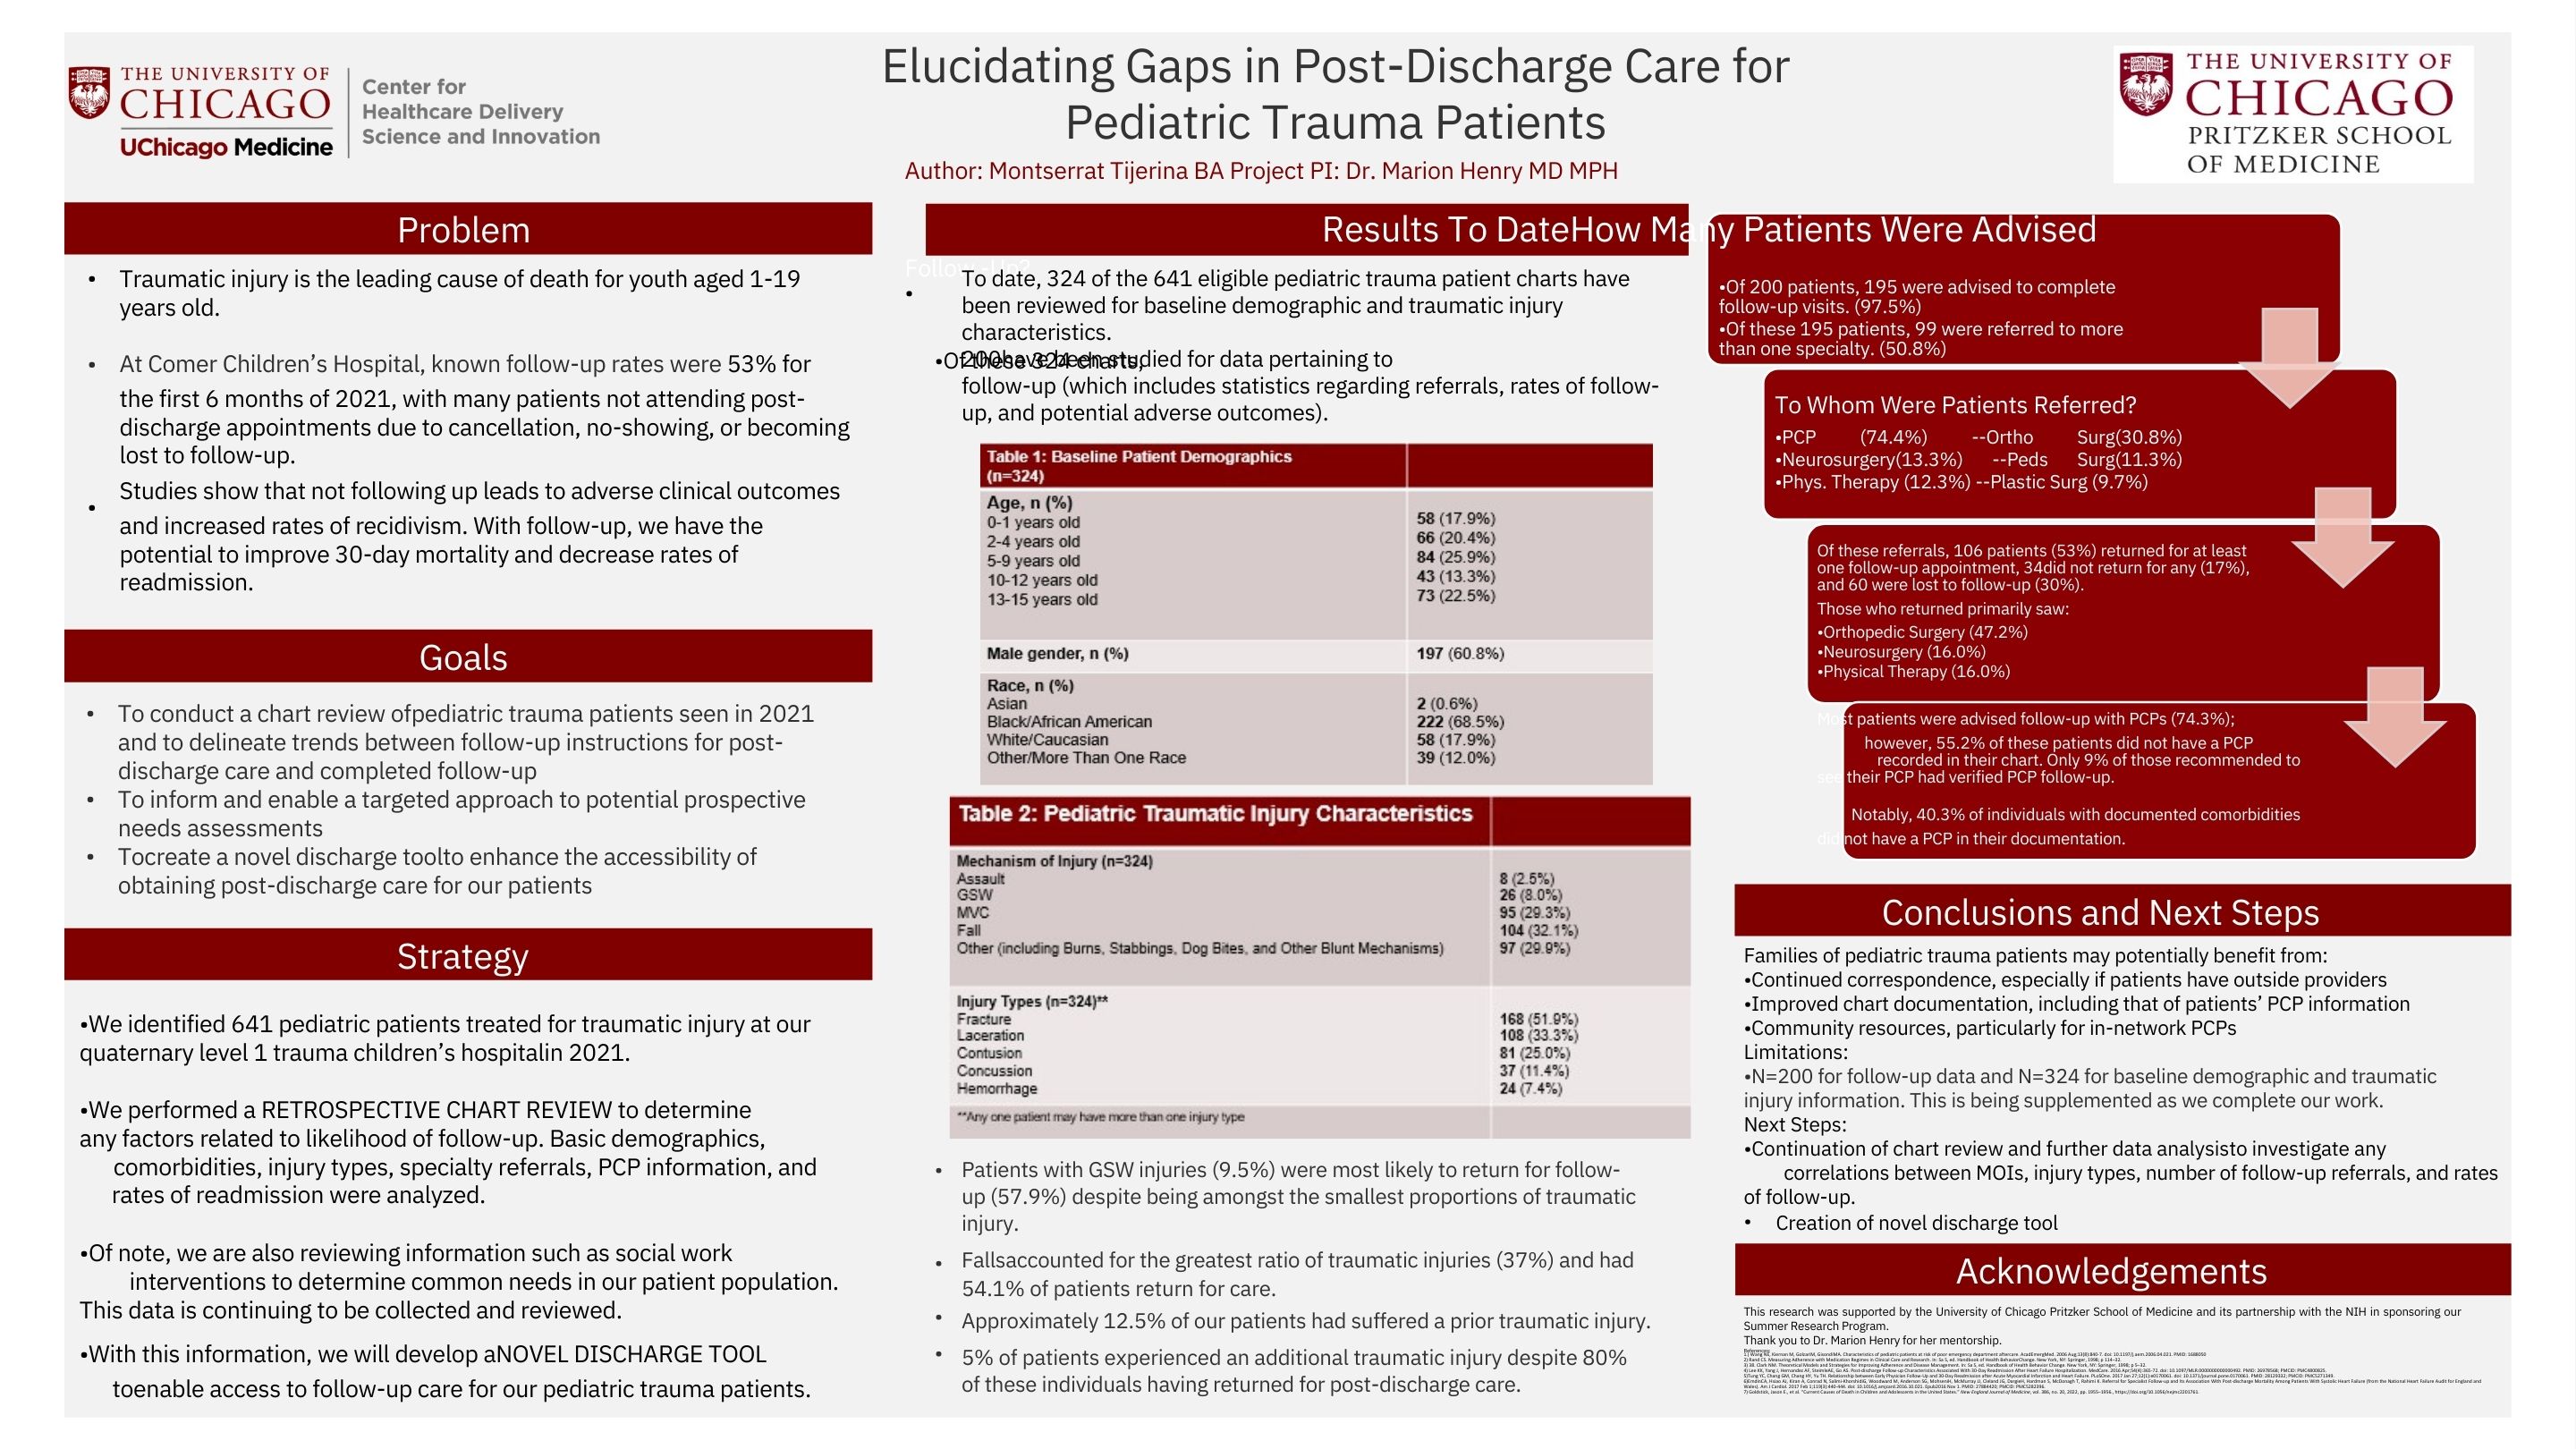 TIJERINA_Elucidating Gaps in Post-Discharge Care for Pediatric Trauma Patients